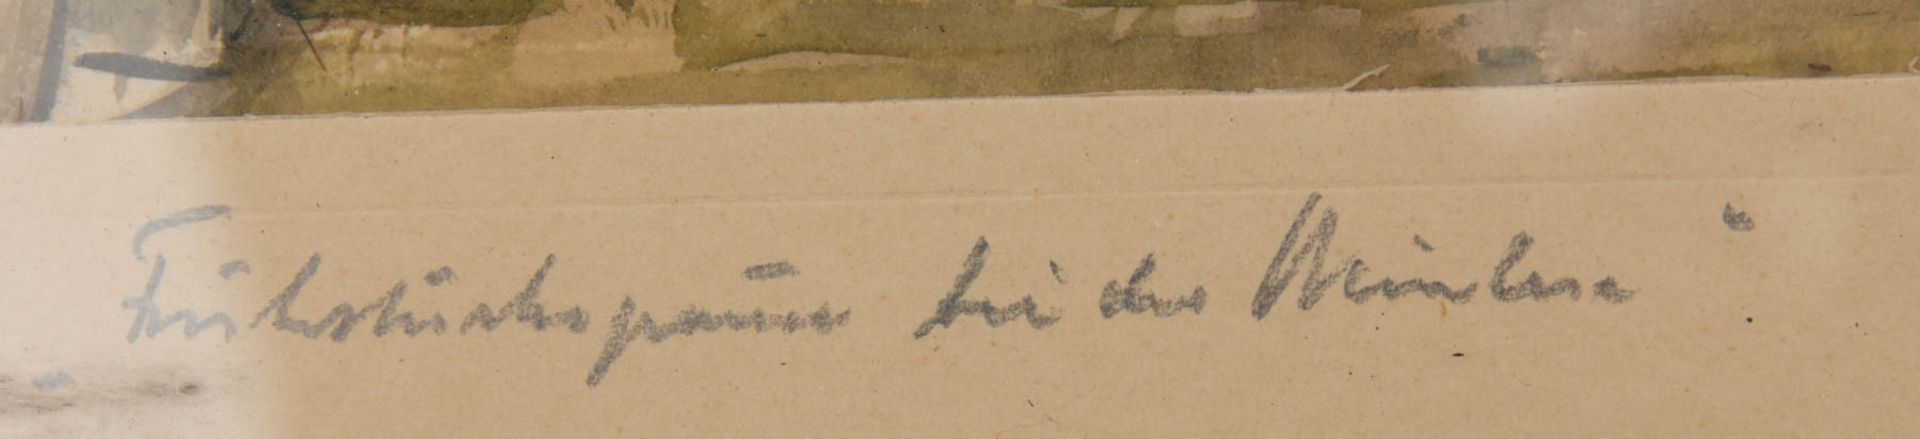 FRITZ LEDERER. FRÜHSTÜCKSPAUSE, Aquarell/Papier hinter Glas, signiert.Fritz Lederer (1878-1949). - Bild 3 aus 3